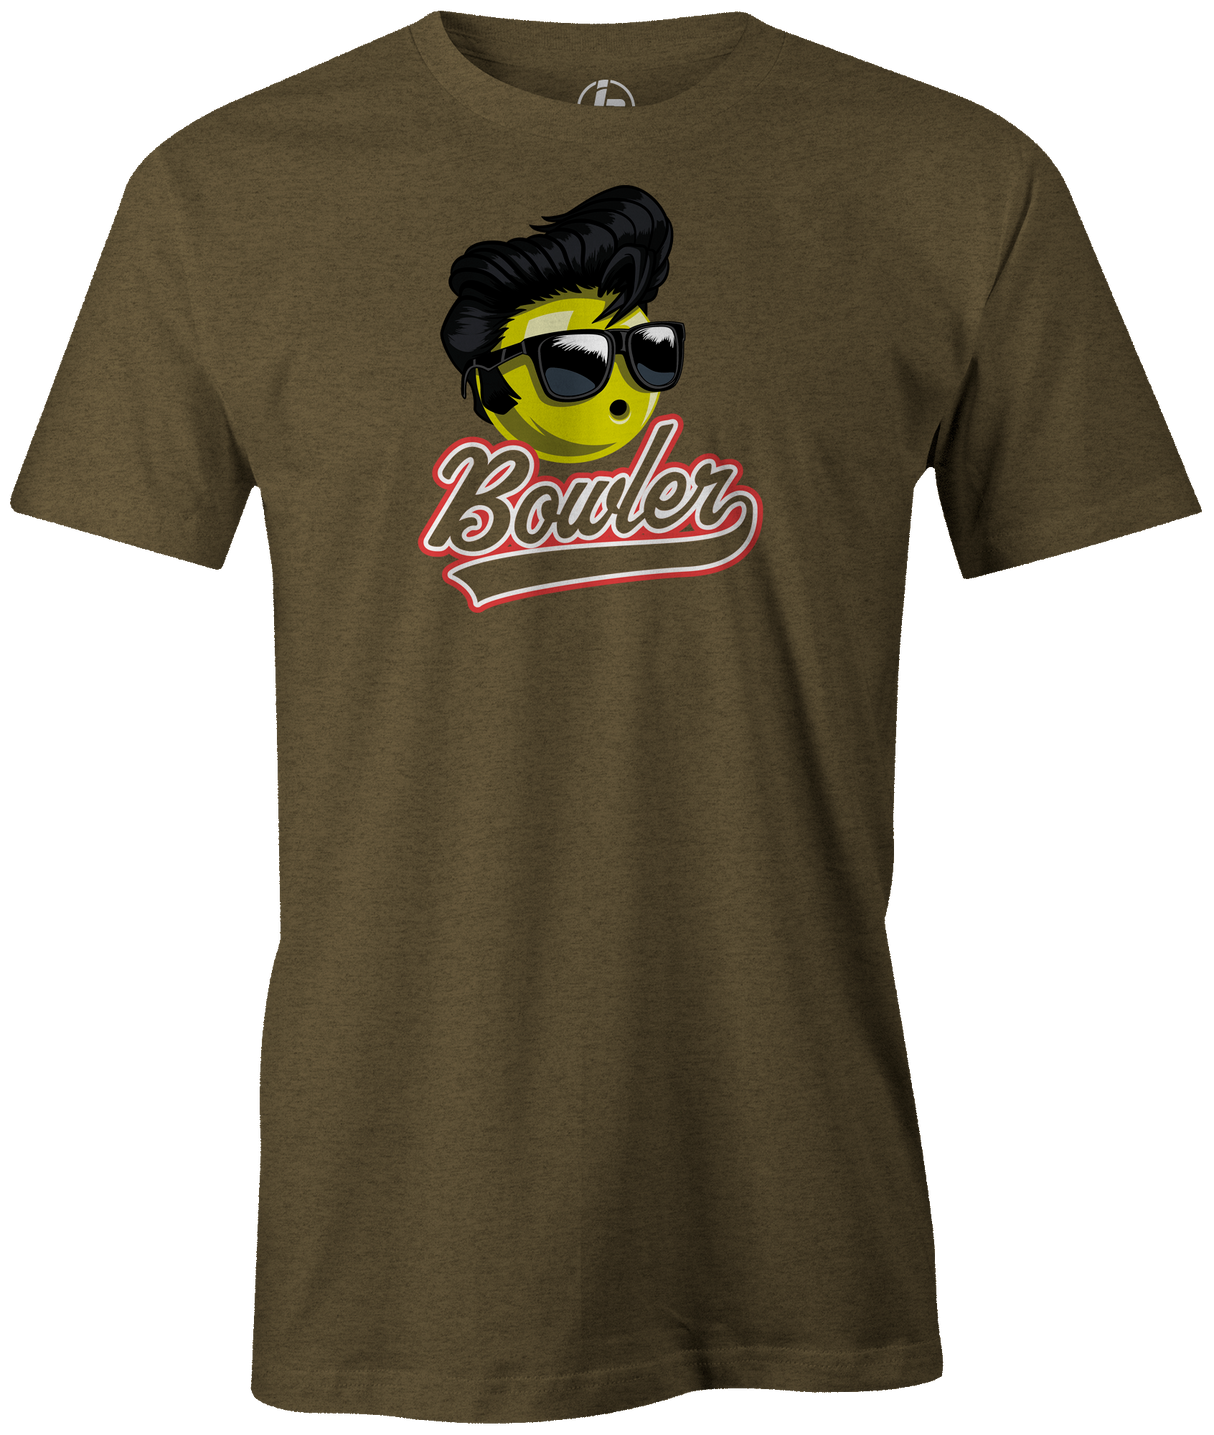 Bowler Ballhead Men's bowling t-shirt, army green. tee, tee-shirt, tees, shirt, apparel, merch, cool. funny, vintage, original, league bowling team shirt, discount, cheap, coupon, free shipping